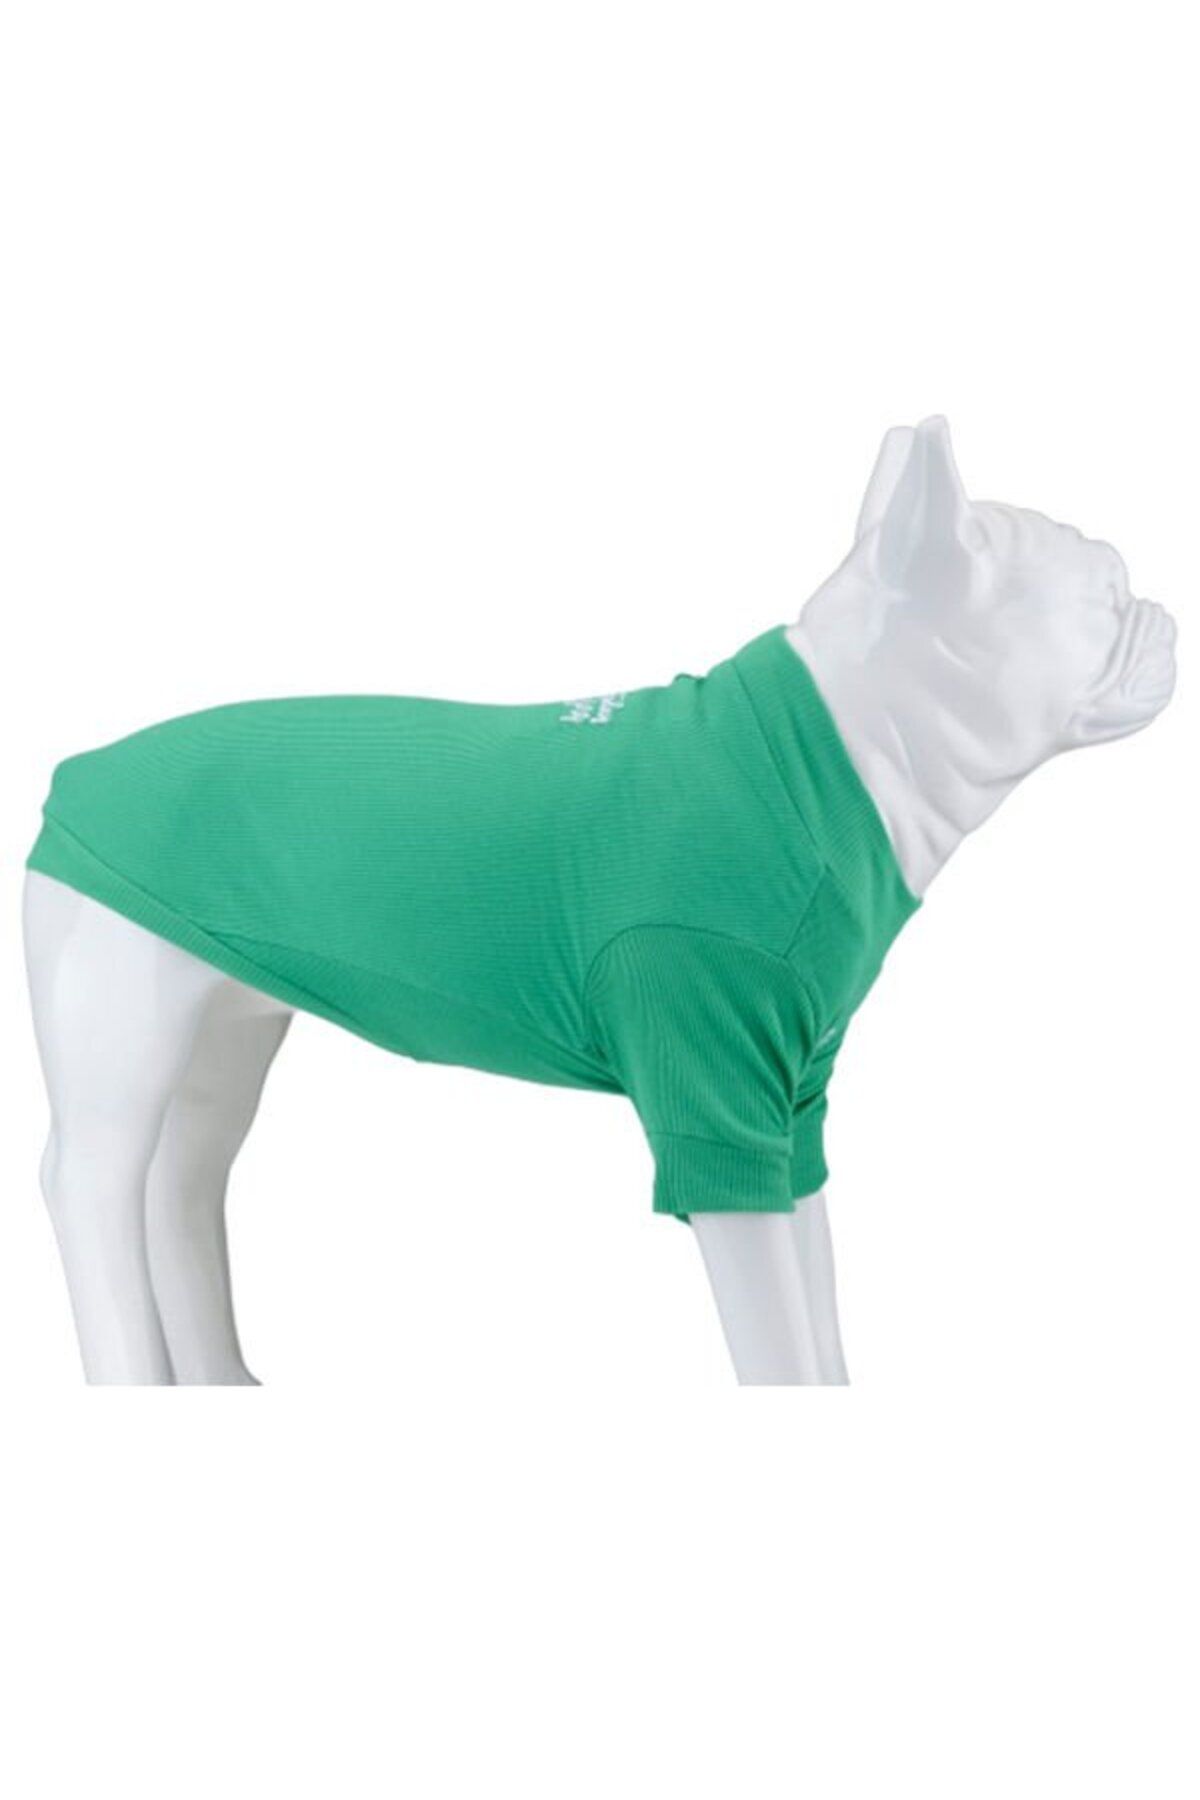 Lindodogs Lindo Dogs Make Today Amazing Köpek Kıyafeti Tshirt Yeşil Beden 6